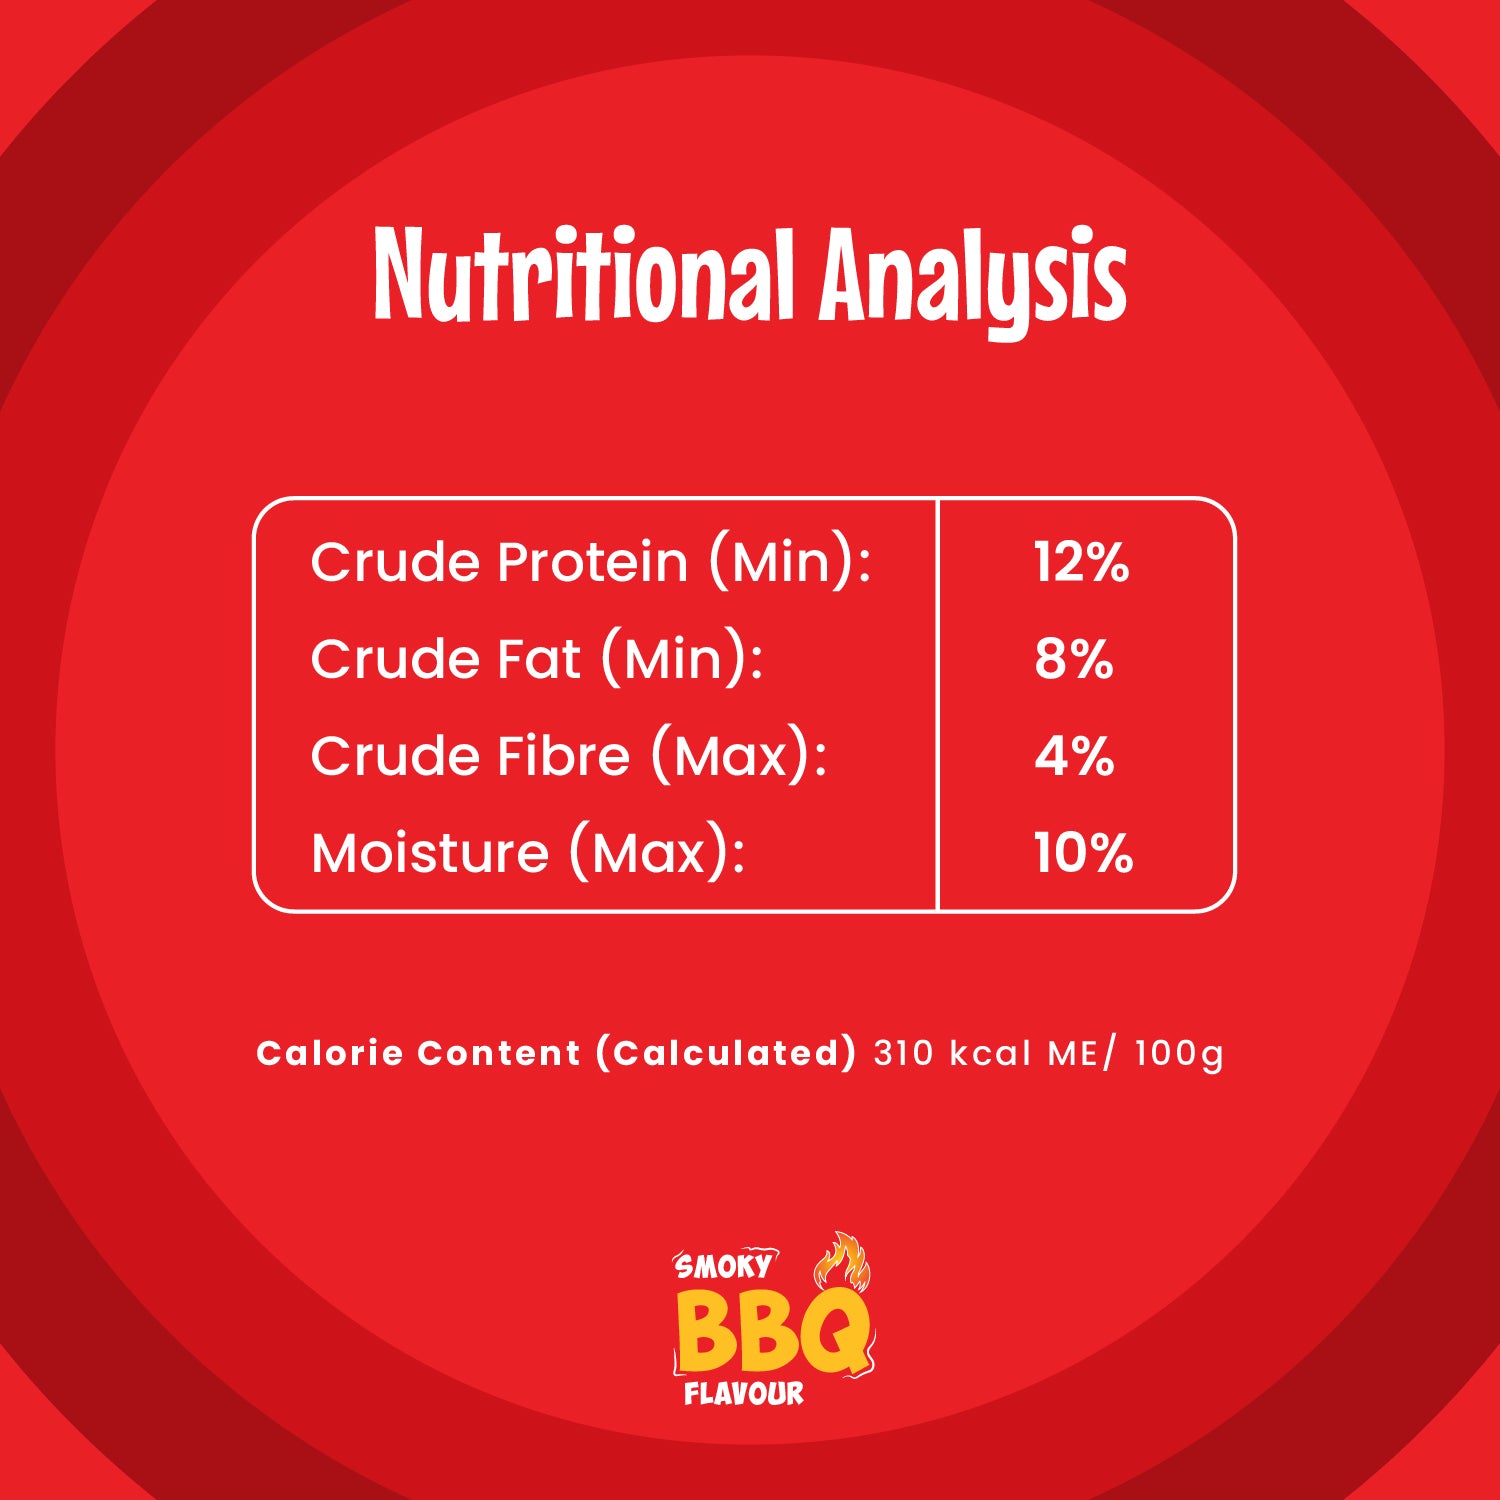 Nutrition Analysis:  Crude Protein (Min): 12% Crude Fat (Min): 8% Crude Fiber (Max): 4% Moisture (Max): 10%  Cholesterol: 0% Calorie content caluculated: 310 kcal ME/100 gm.